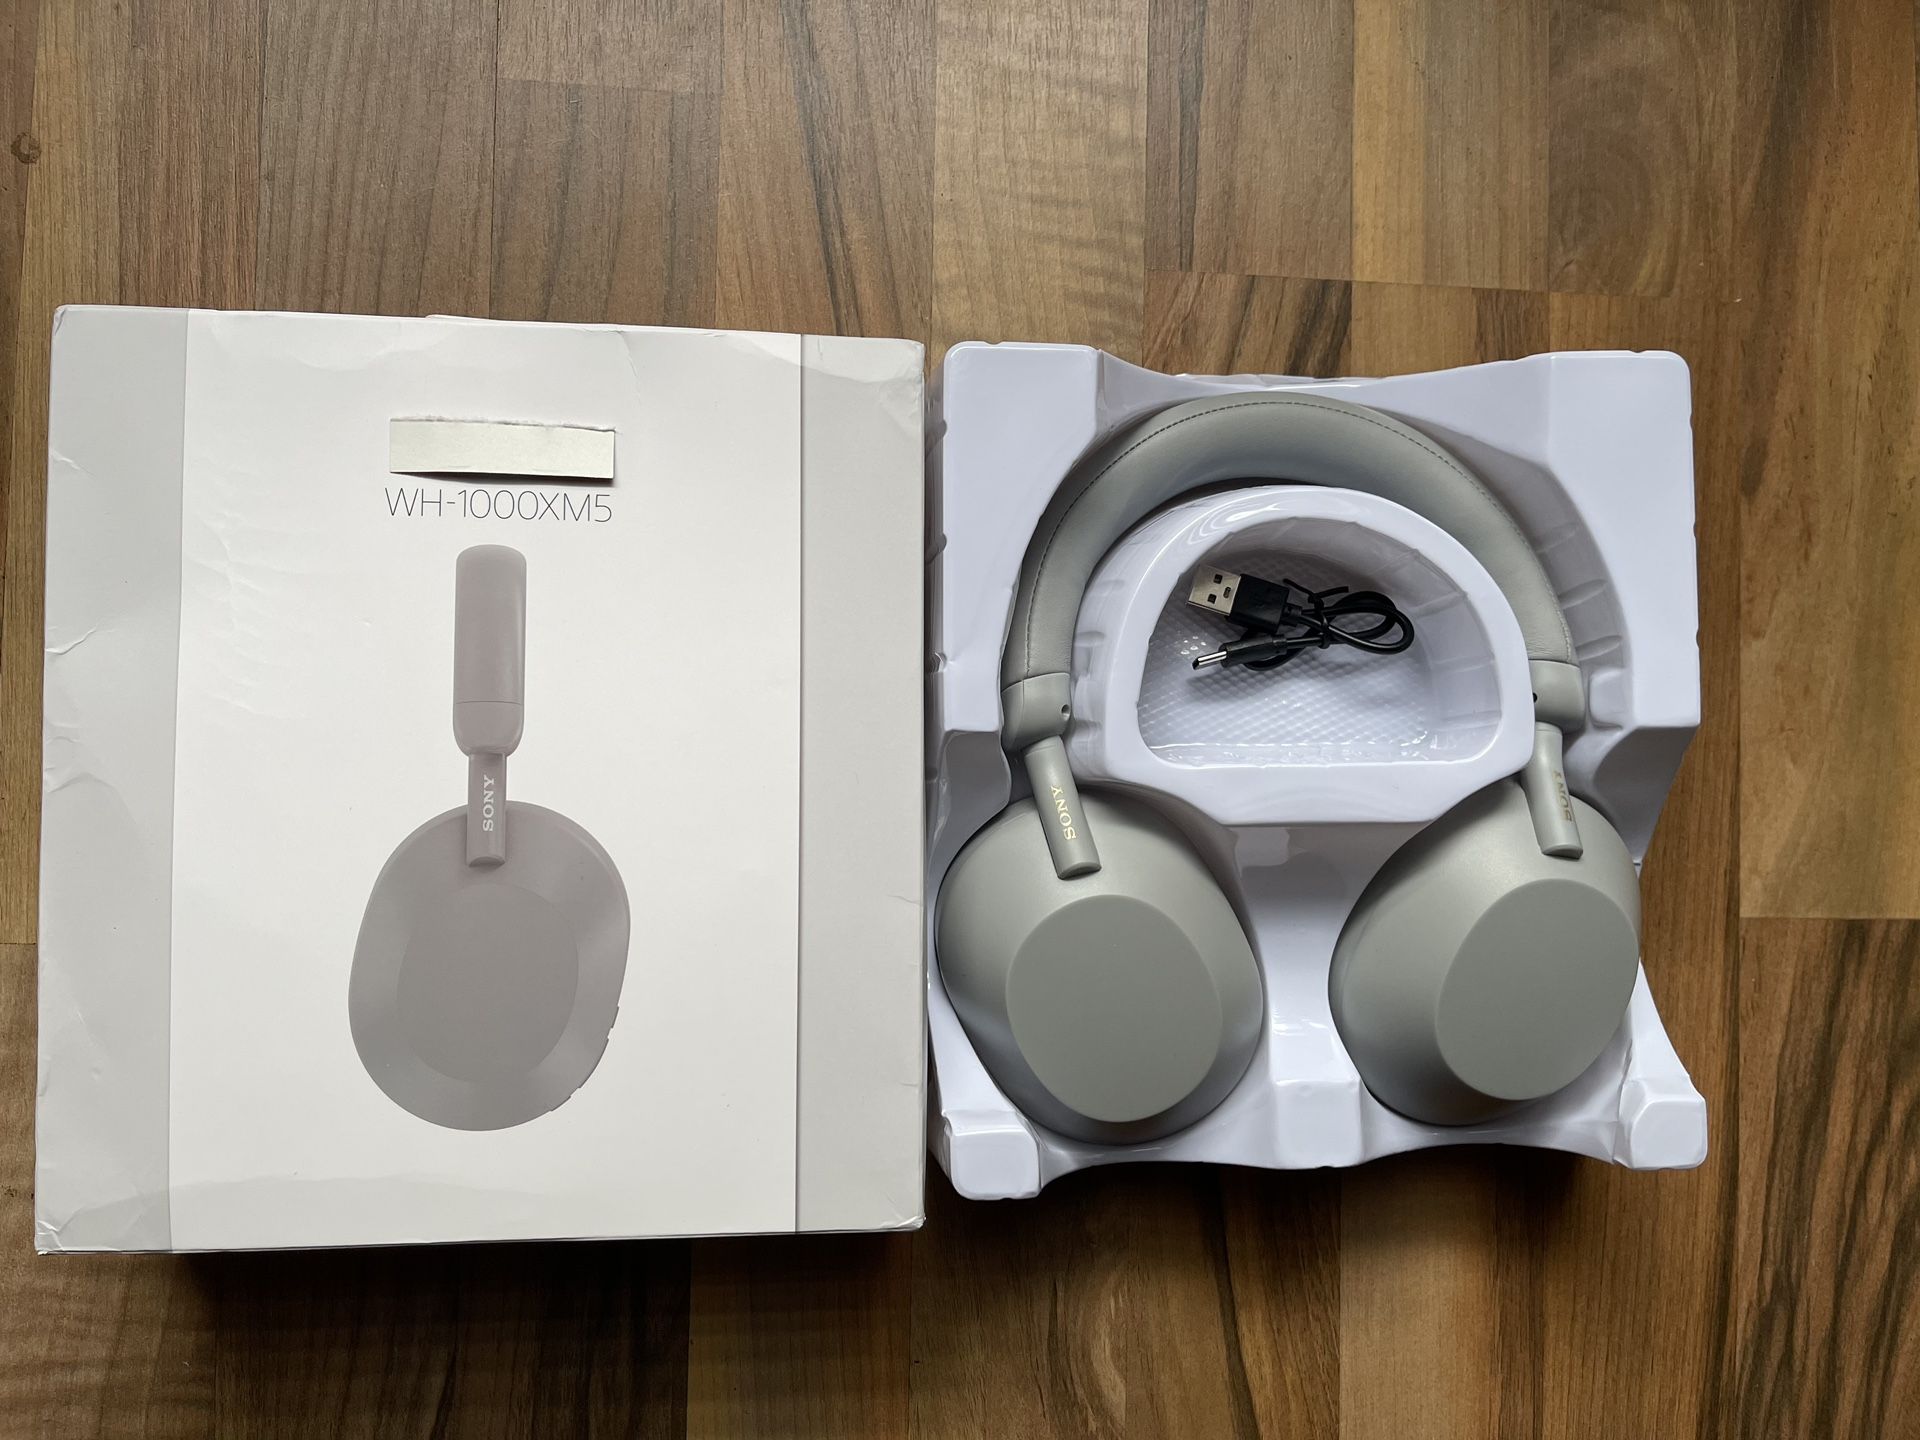 Bluetooth Wireless Headset Headphone Sony Looks Alike Not Original